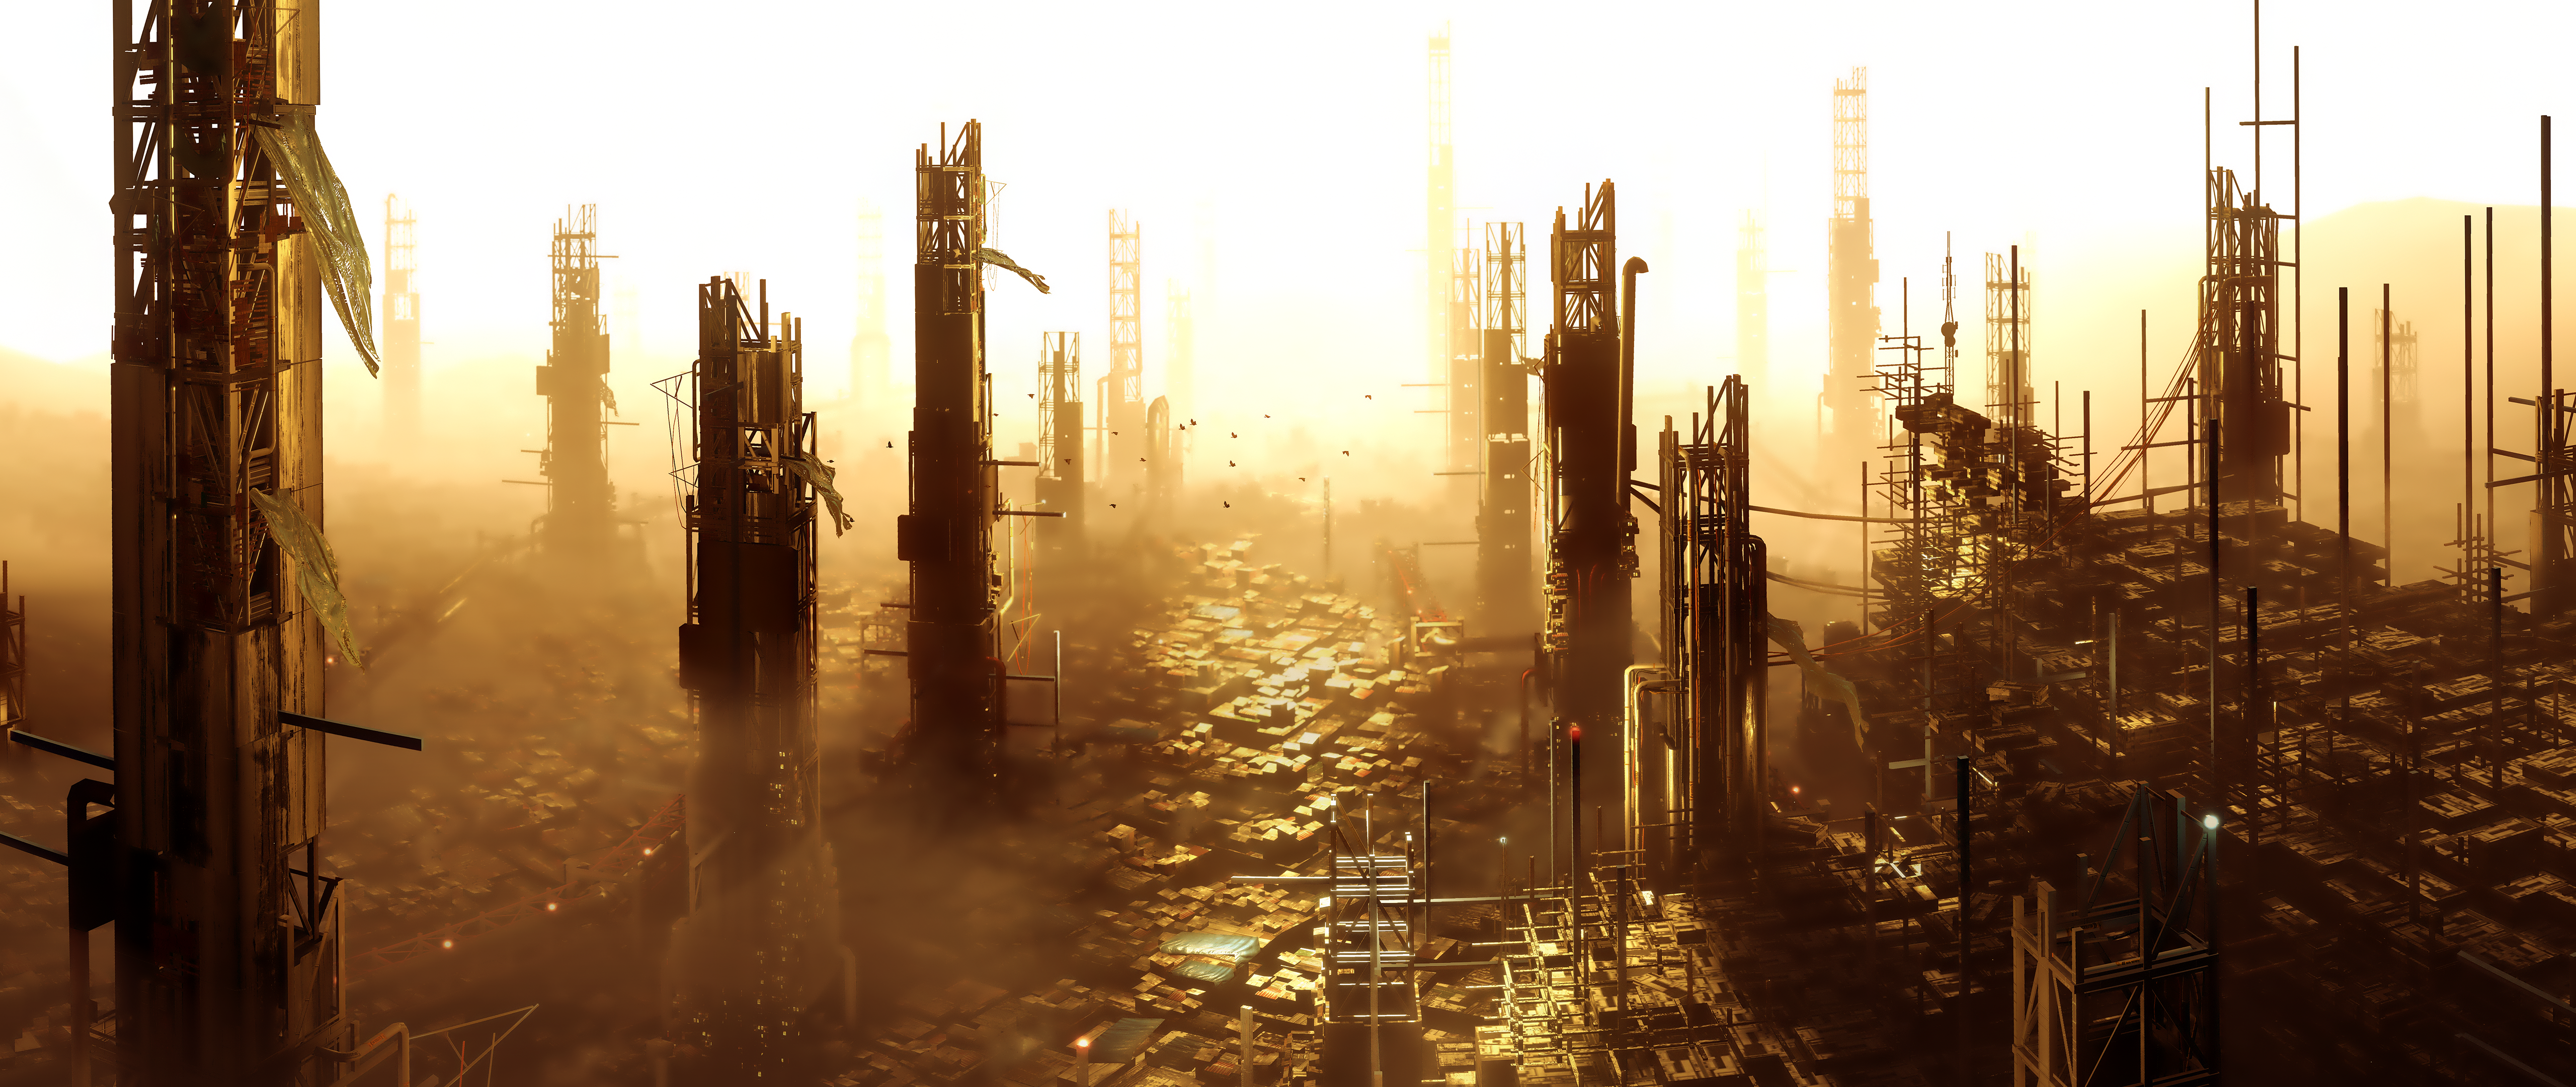 Deus Ex Mankind Divided 4k Ultra HD Wallpaper Background Image